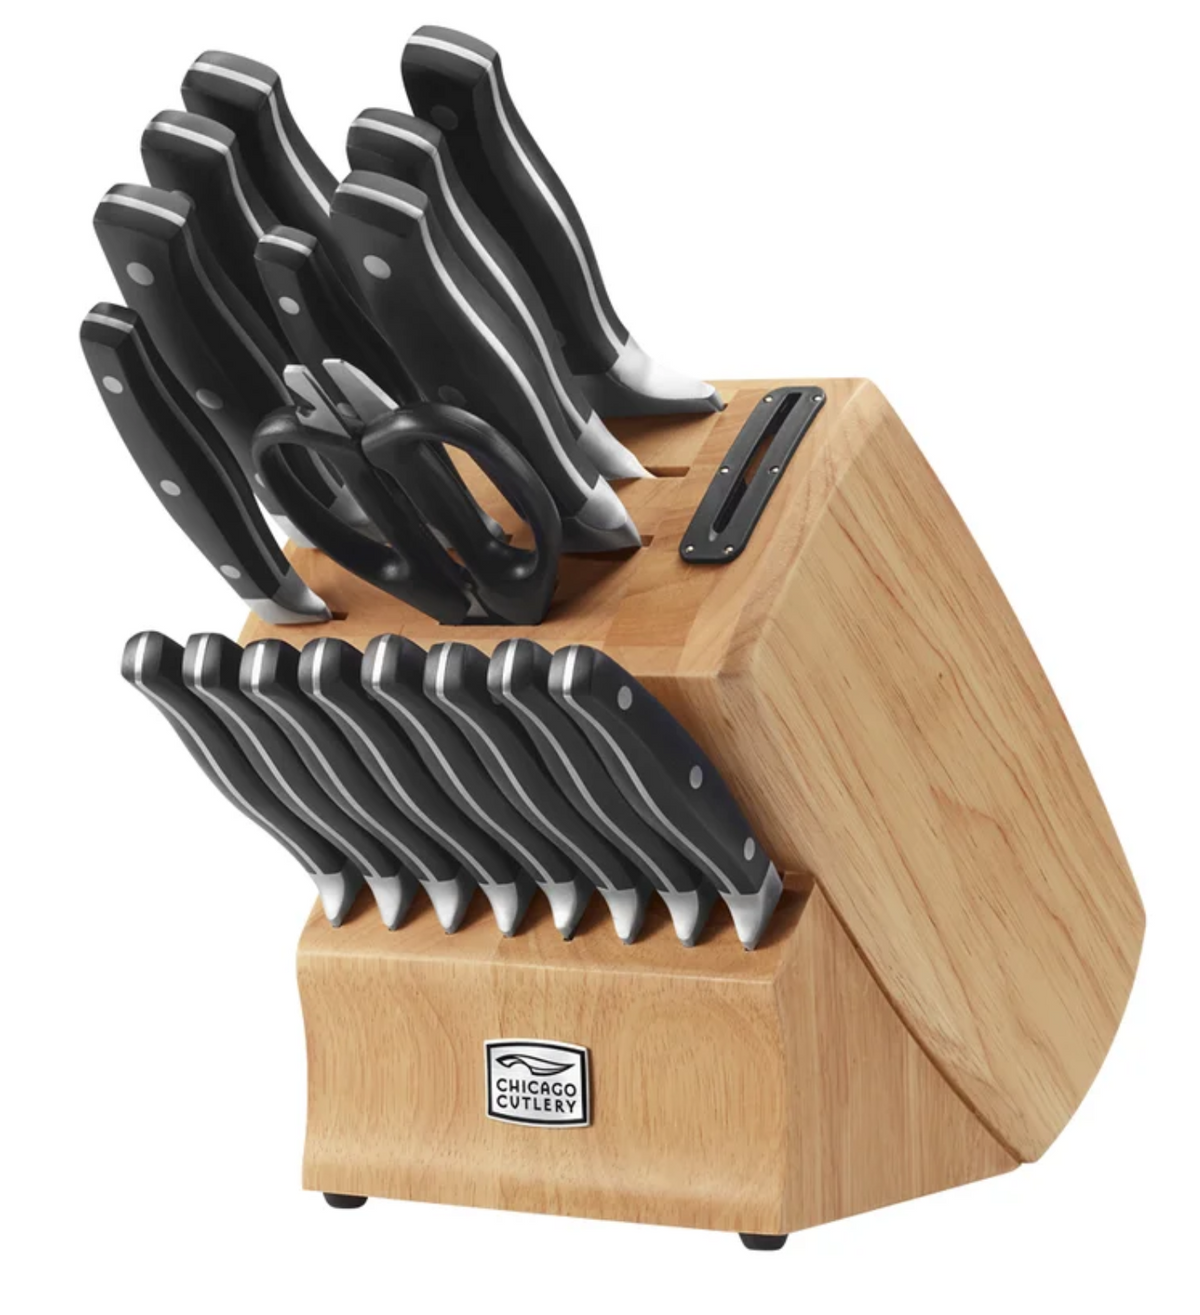 Chicago Cutlery Insignia2 18-Piece Knife Block Set — Liberty 